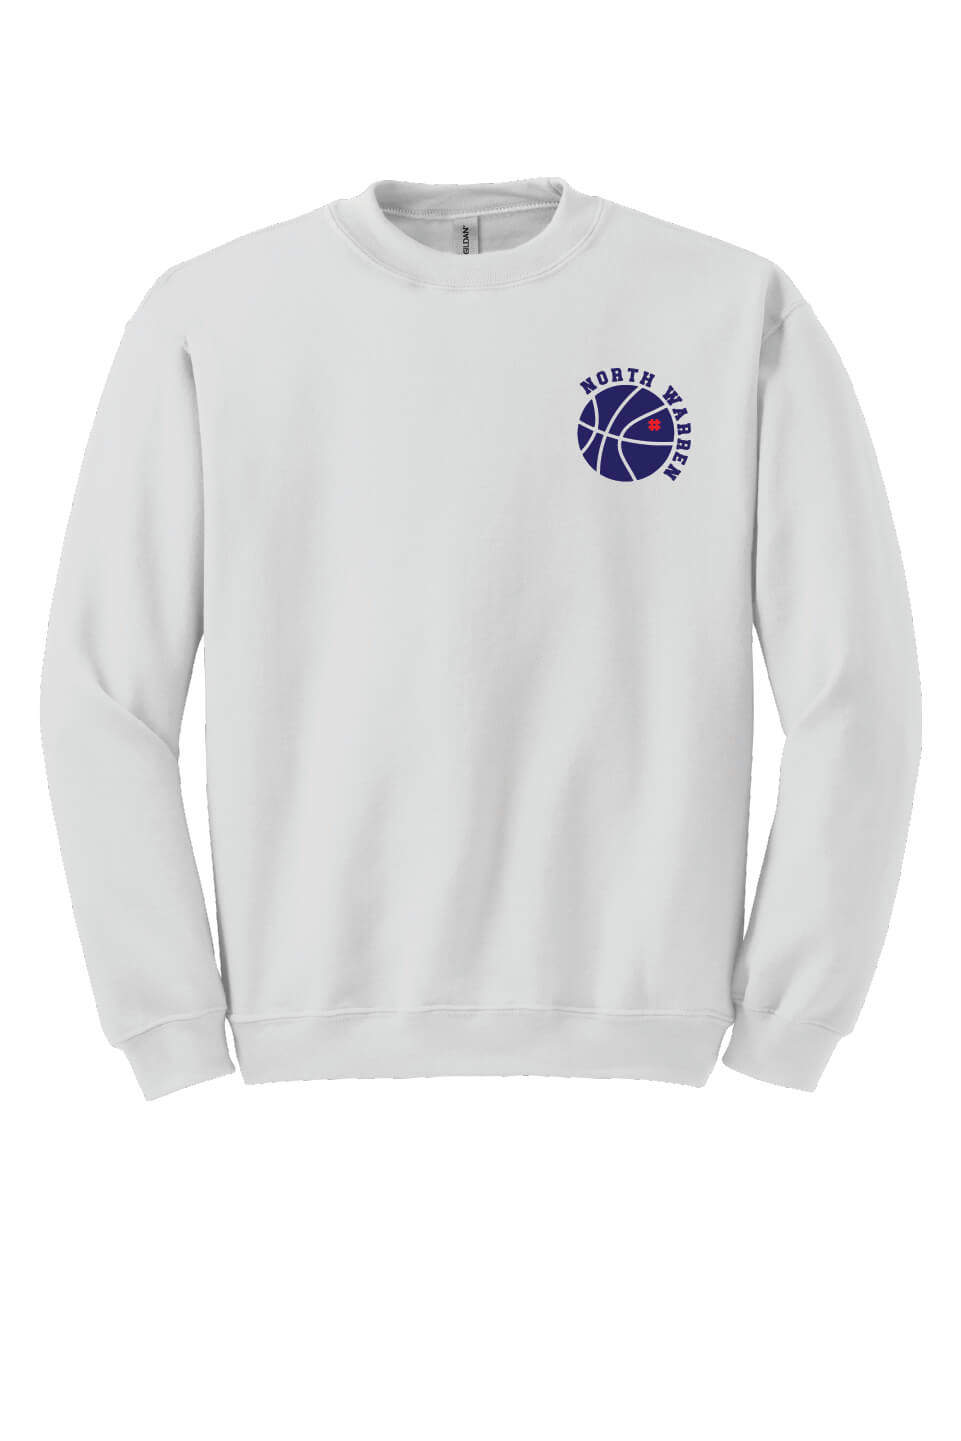 North Warren Basketball Crewneck Sweatshirt